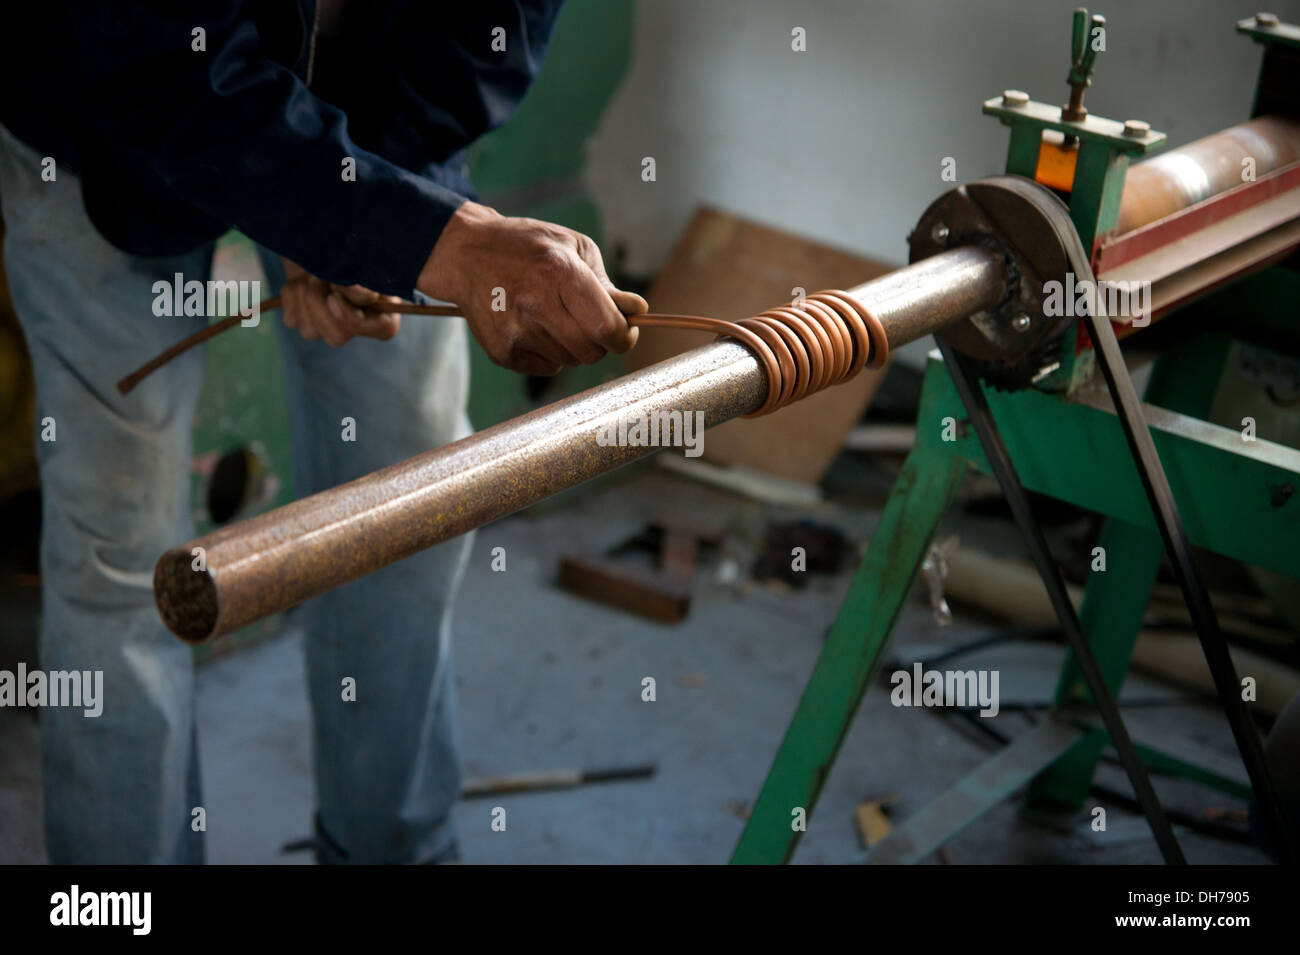 Copper heat exchanger making process Stock Photo